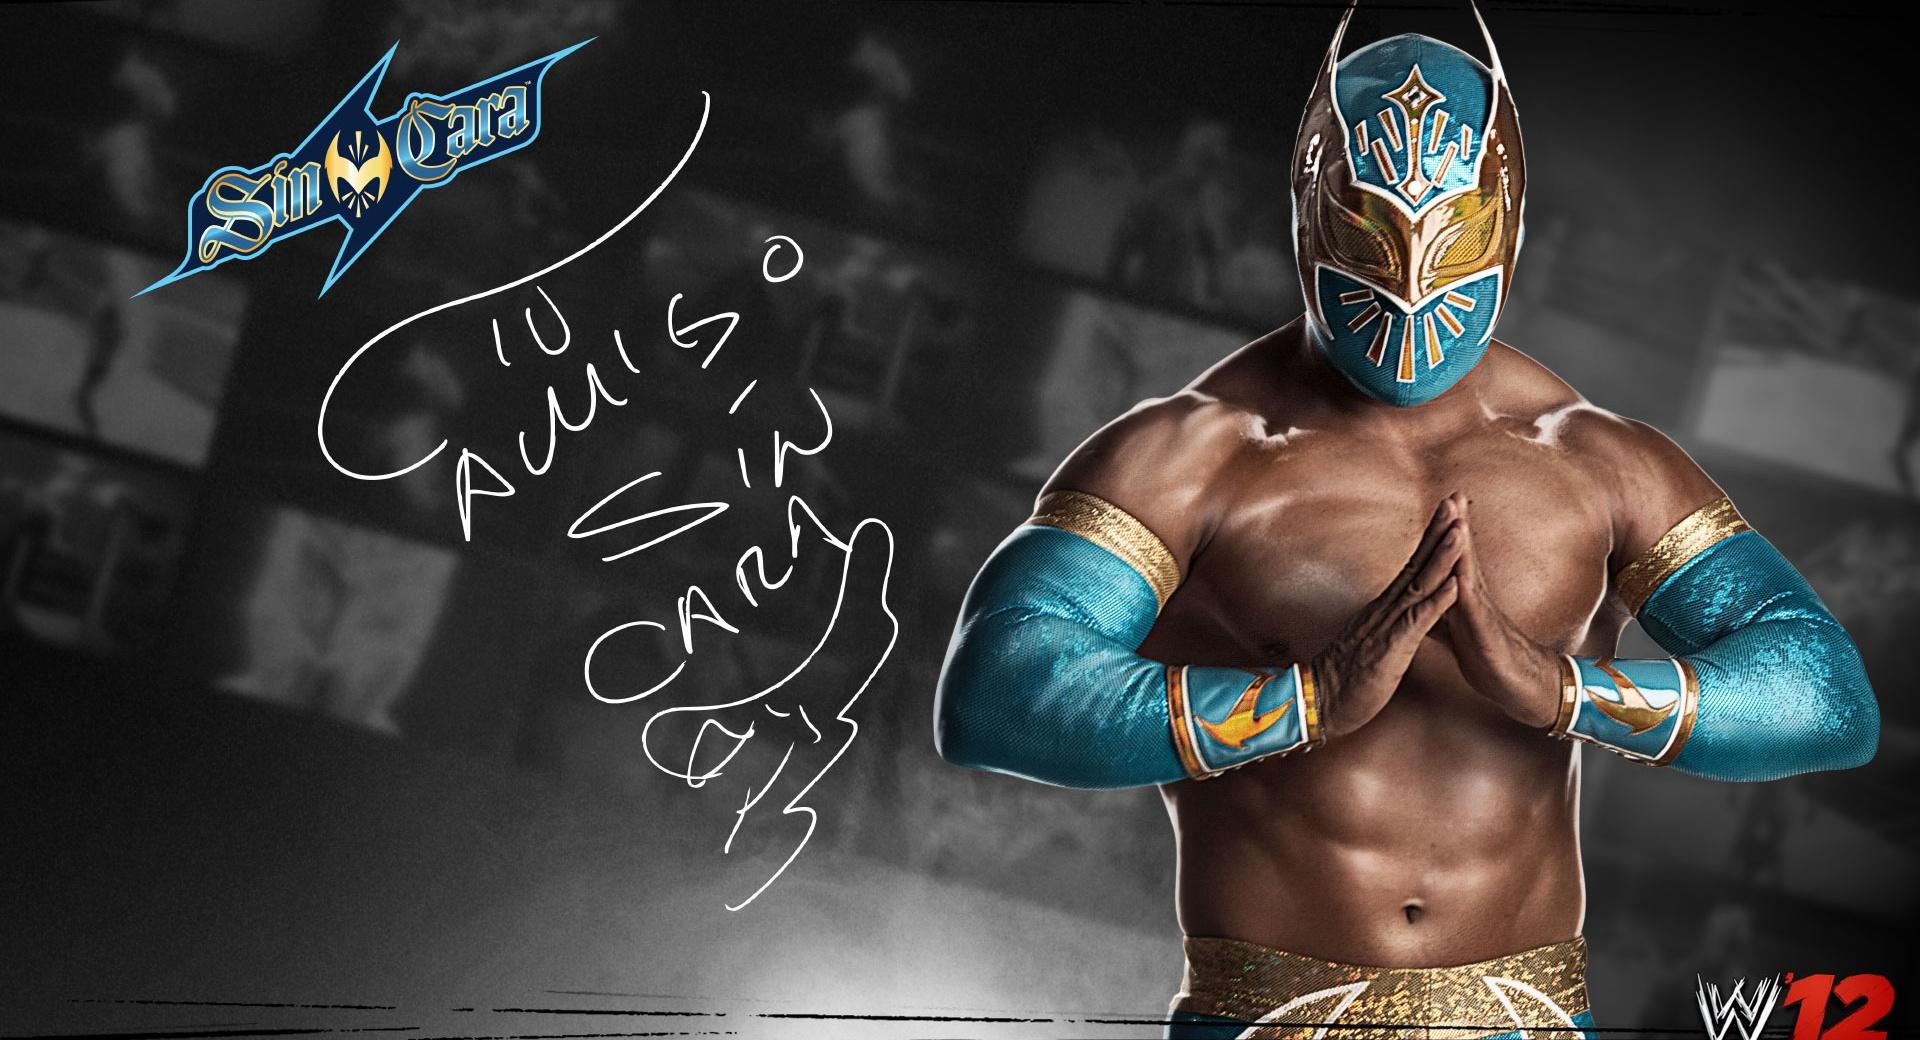 WWE 12 Sin Cara at 1024 x 1024 iPad size wallpapers HD quality